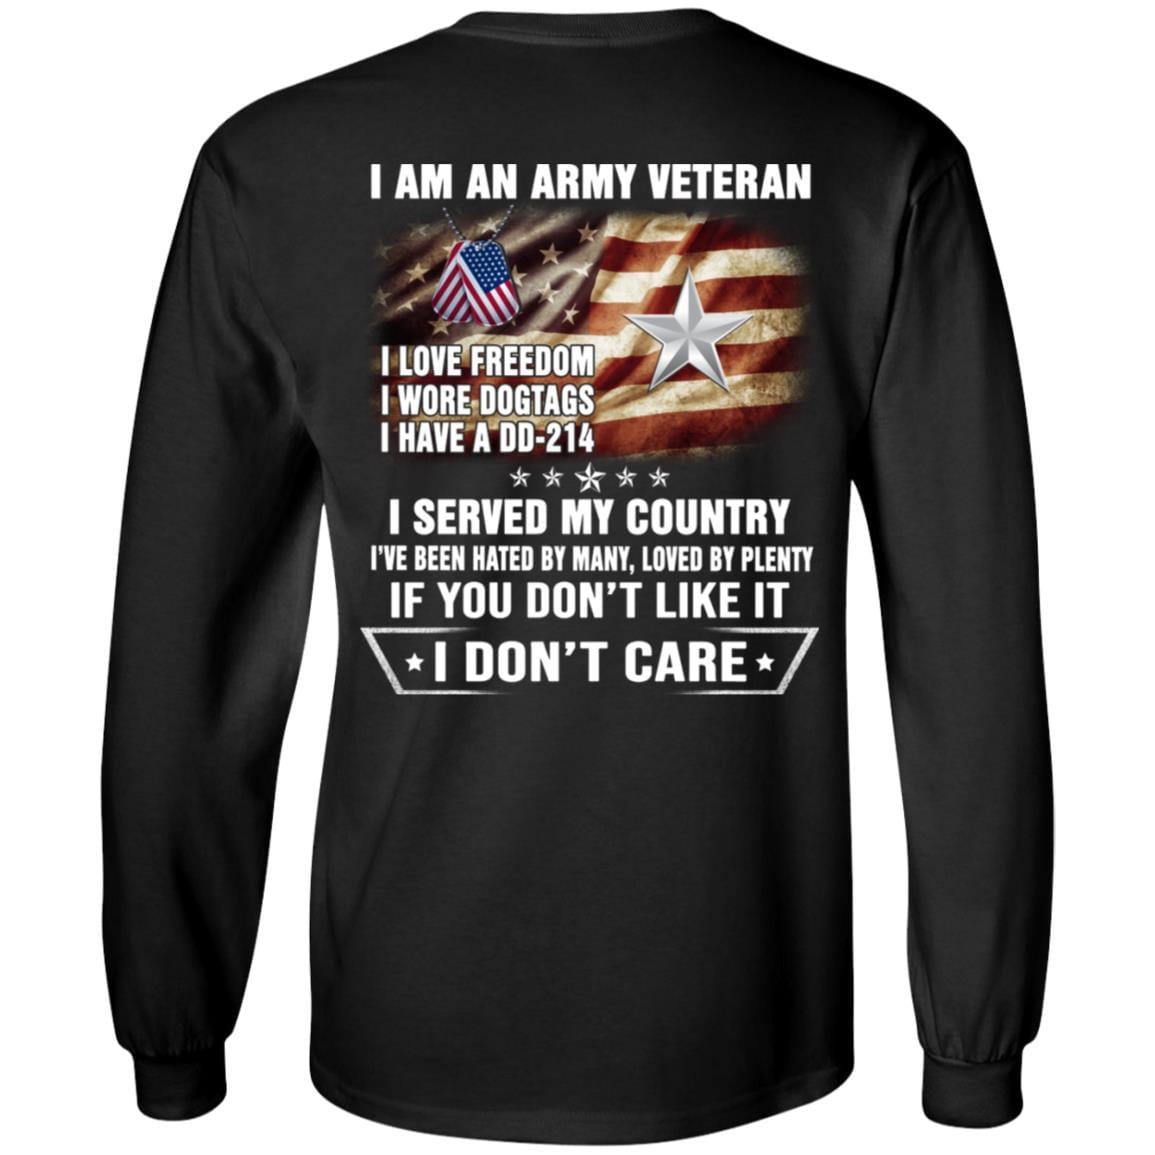 T-Shirt "I Am An Army Veteran" O-7 Brigadier General(BG)Rank On Back-TShirt-Army-Veterans Nation